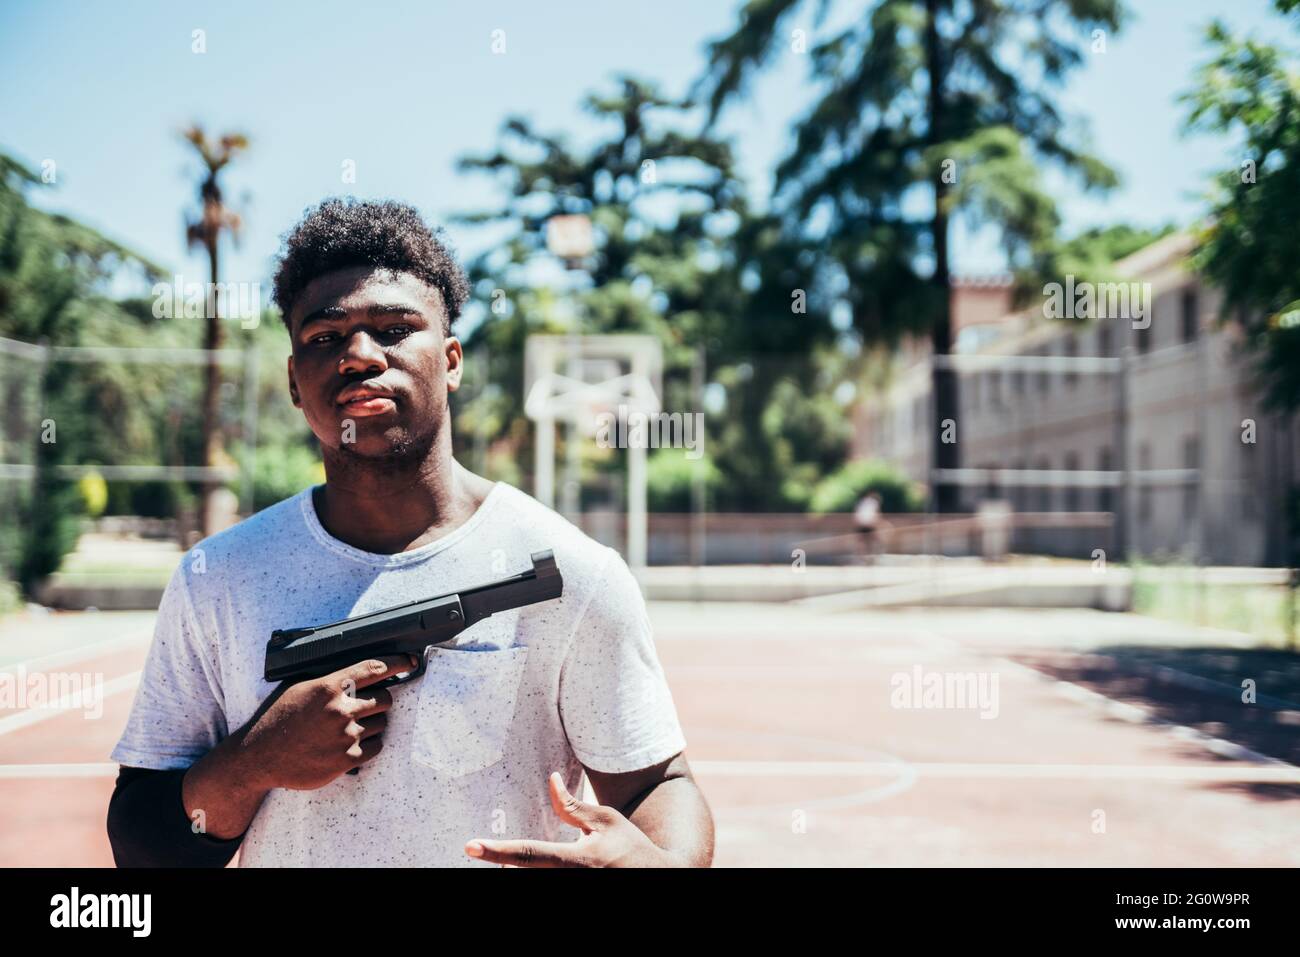 Black African American boy clutching a gun on an urban basketball court. Stock Photo